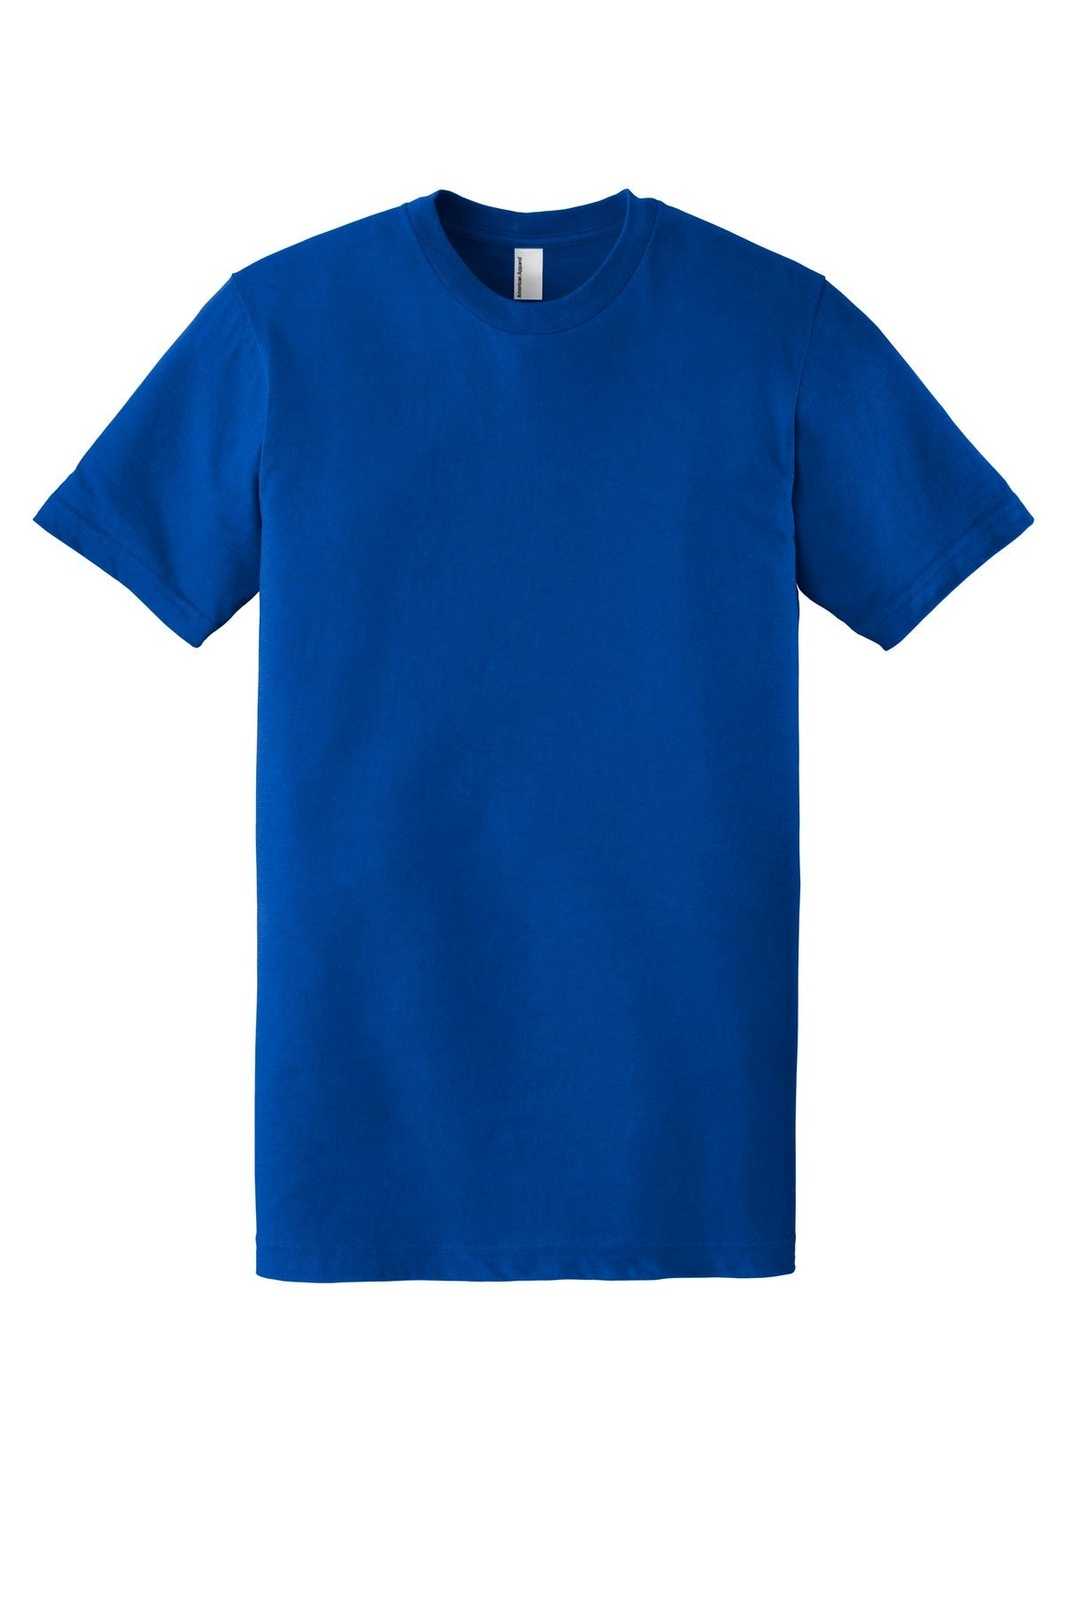 American Apparel 2001W Fine Jersey T-Shirt - Royal Blue - HIT a Double